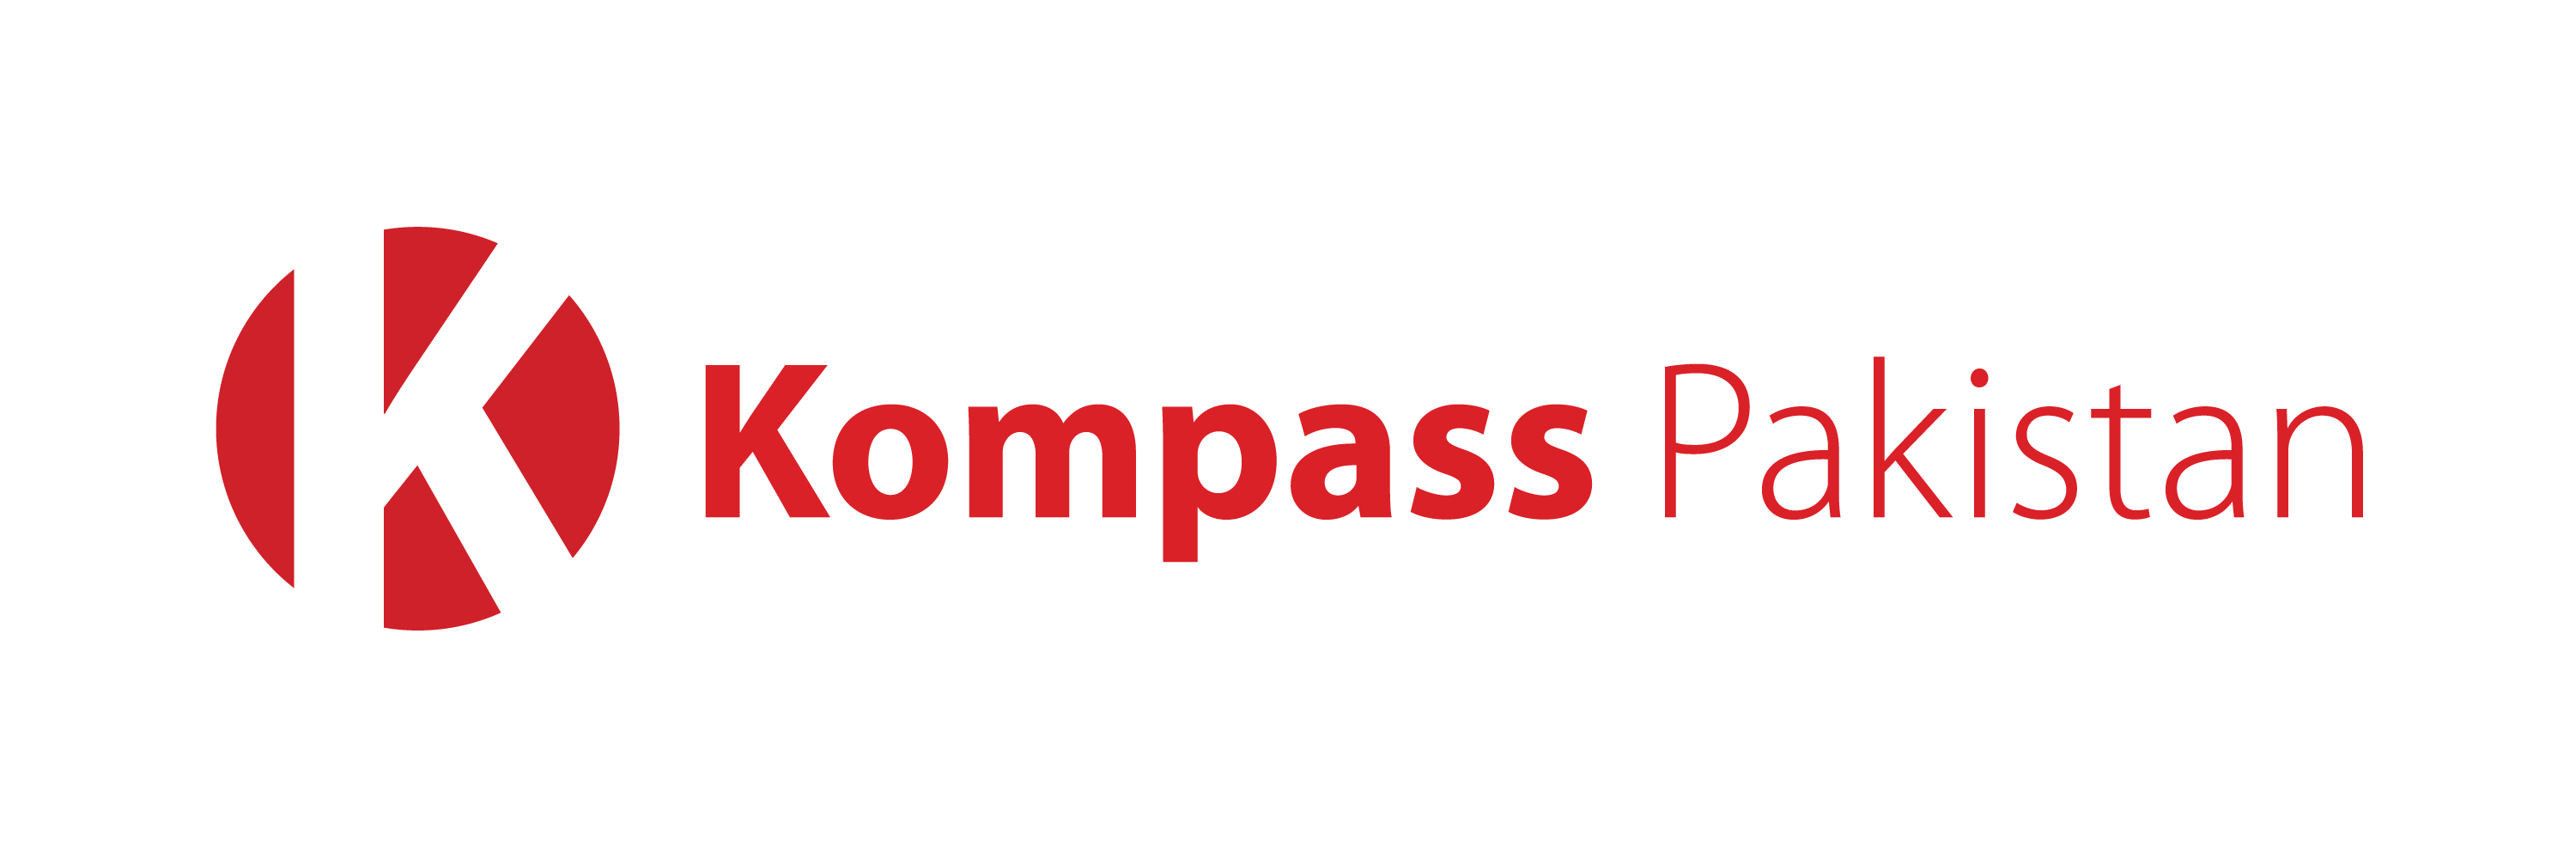 Kompass Pakistan Private Limited - Logo (1)